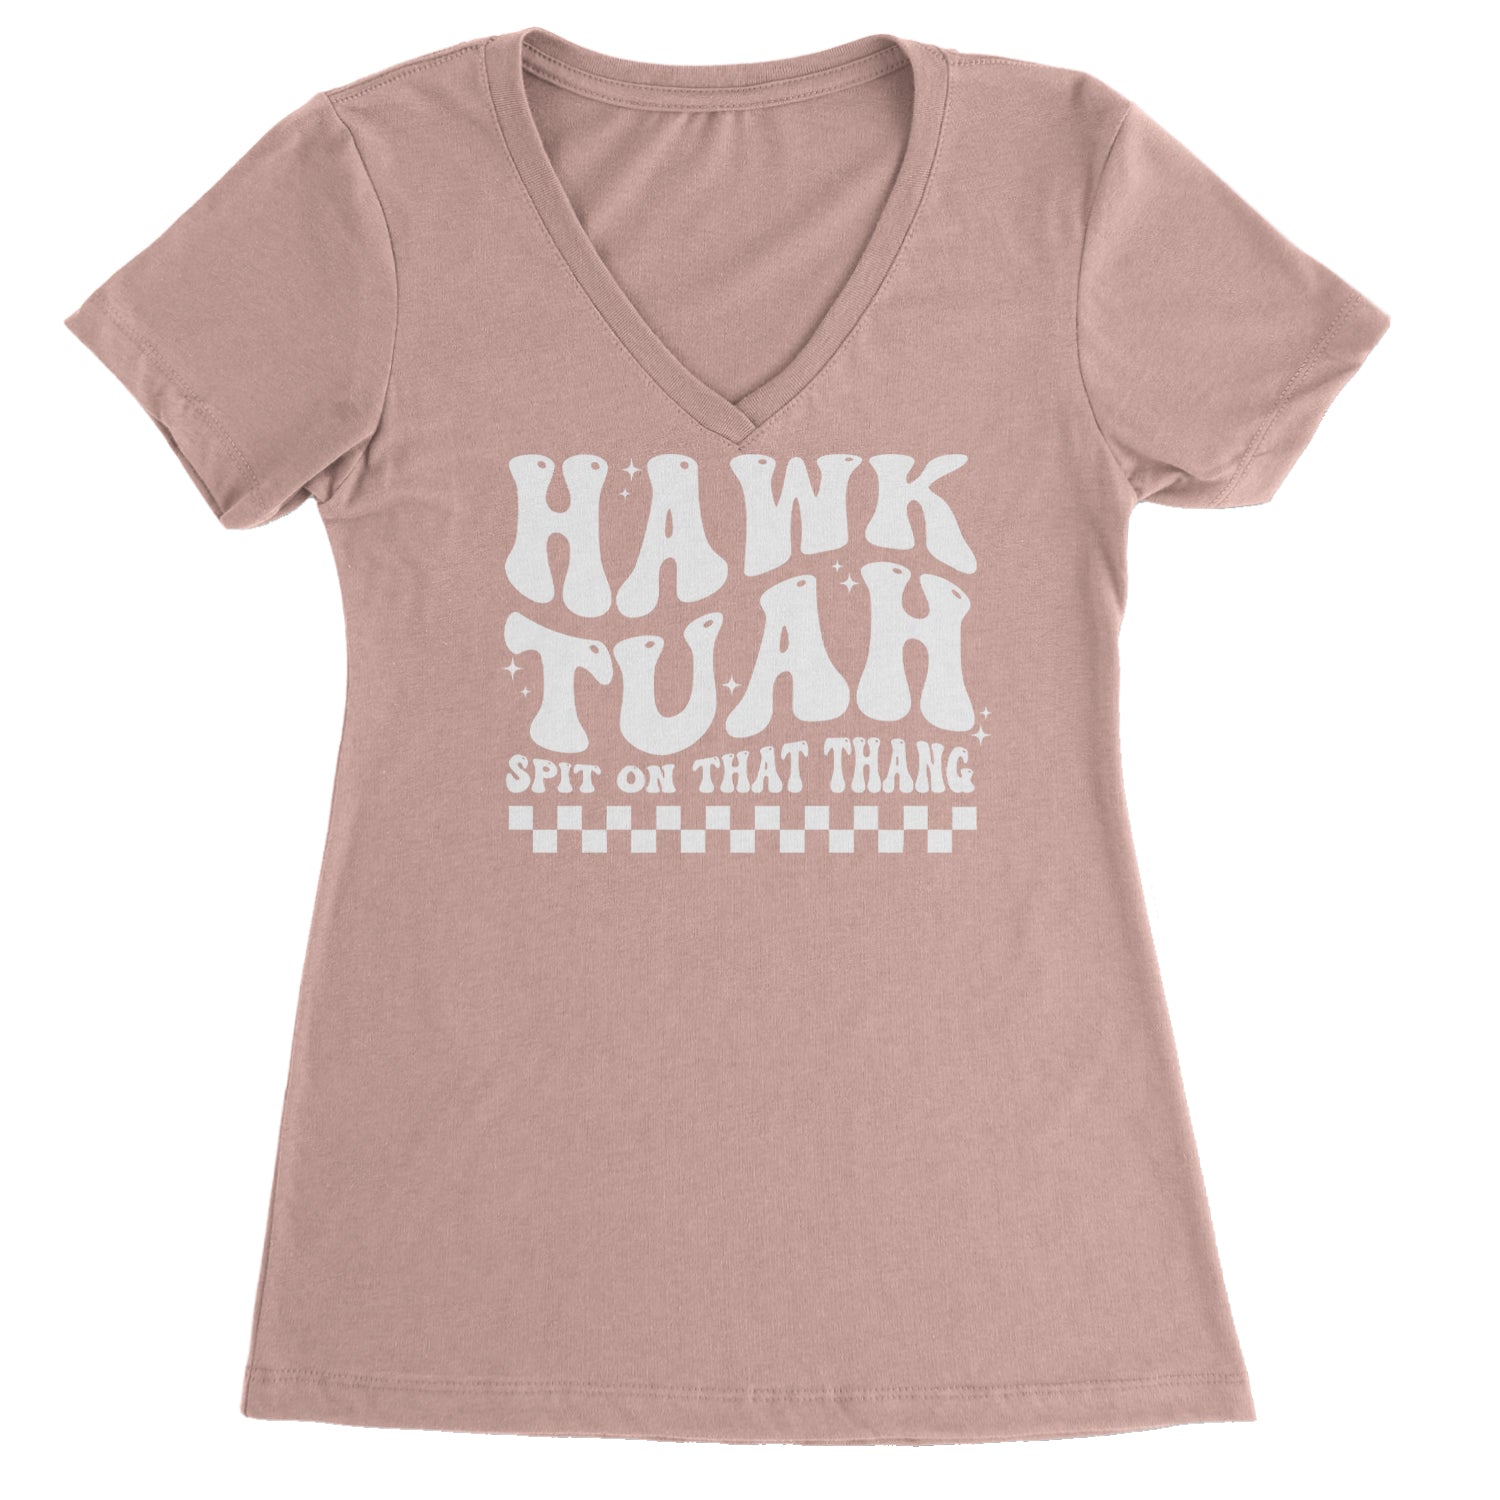 Hawk Tuah Spit On That Thang Ladies V-Neck T-shirt Light Pink